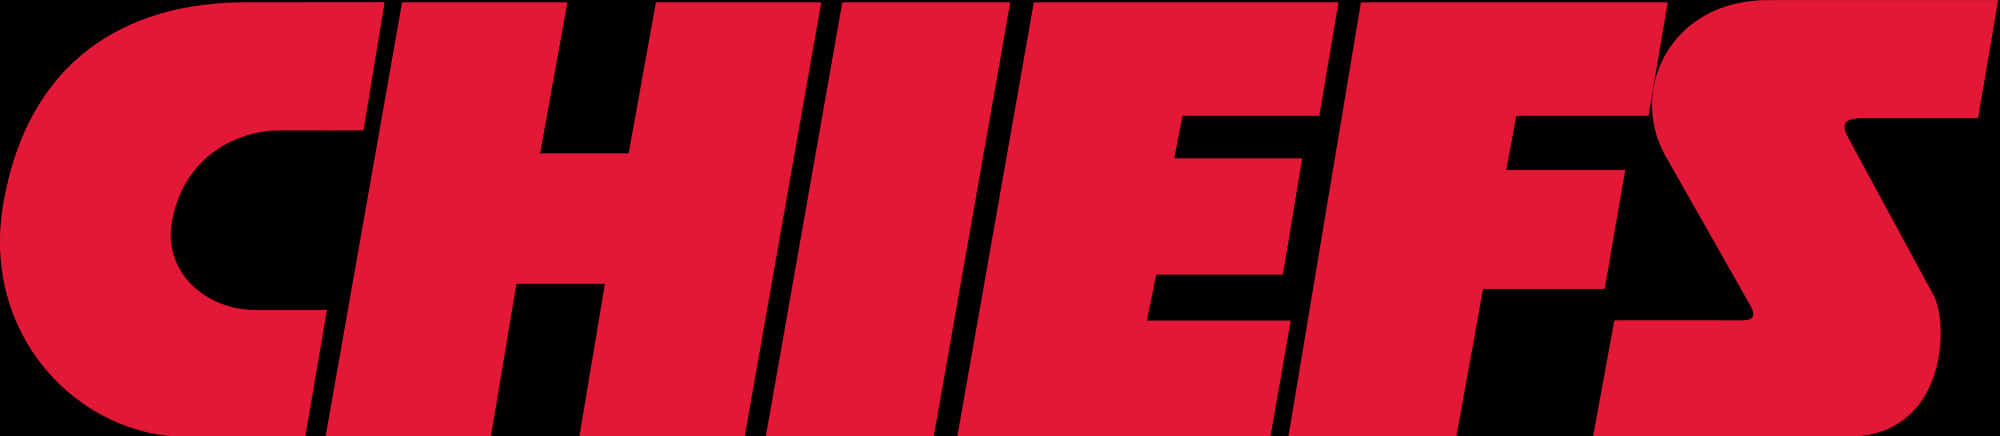 Chiefs Text Logo